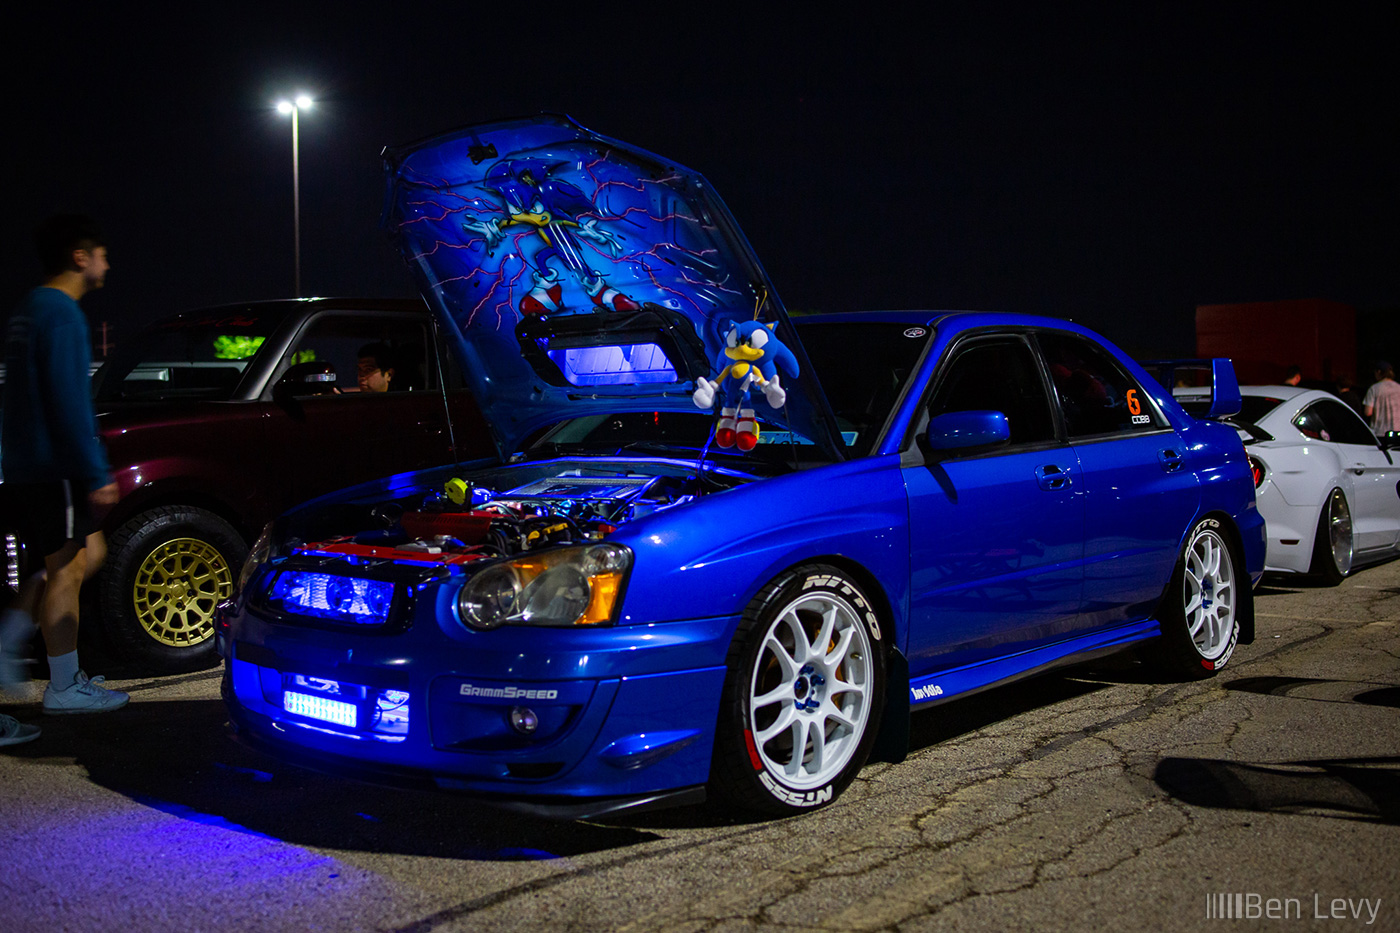 Blue Subaru WRX with Sonic the Hedgehog Theme